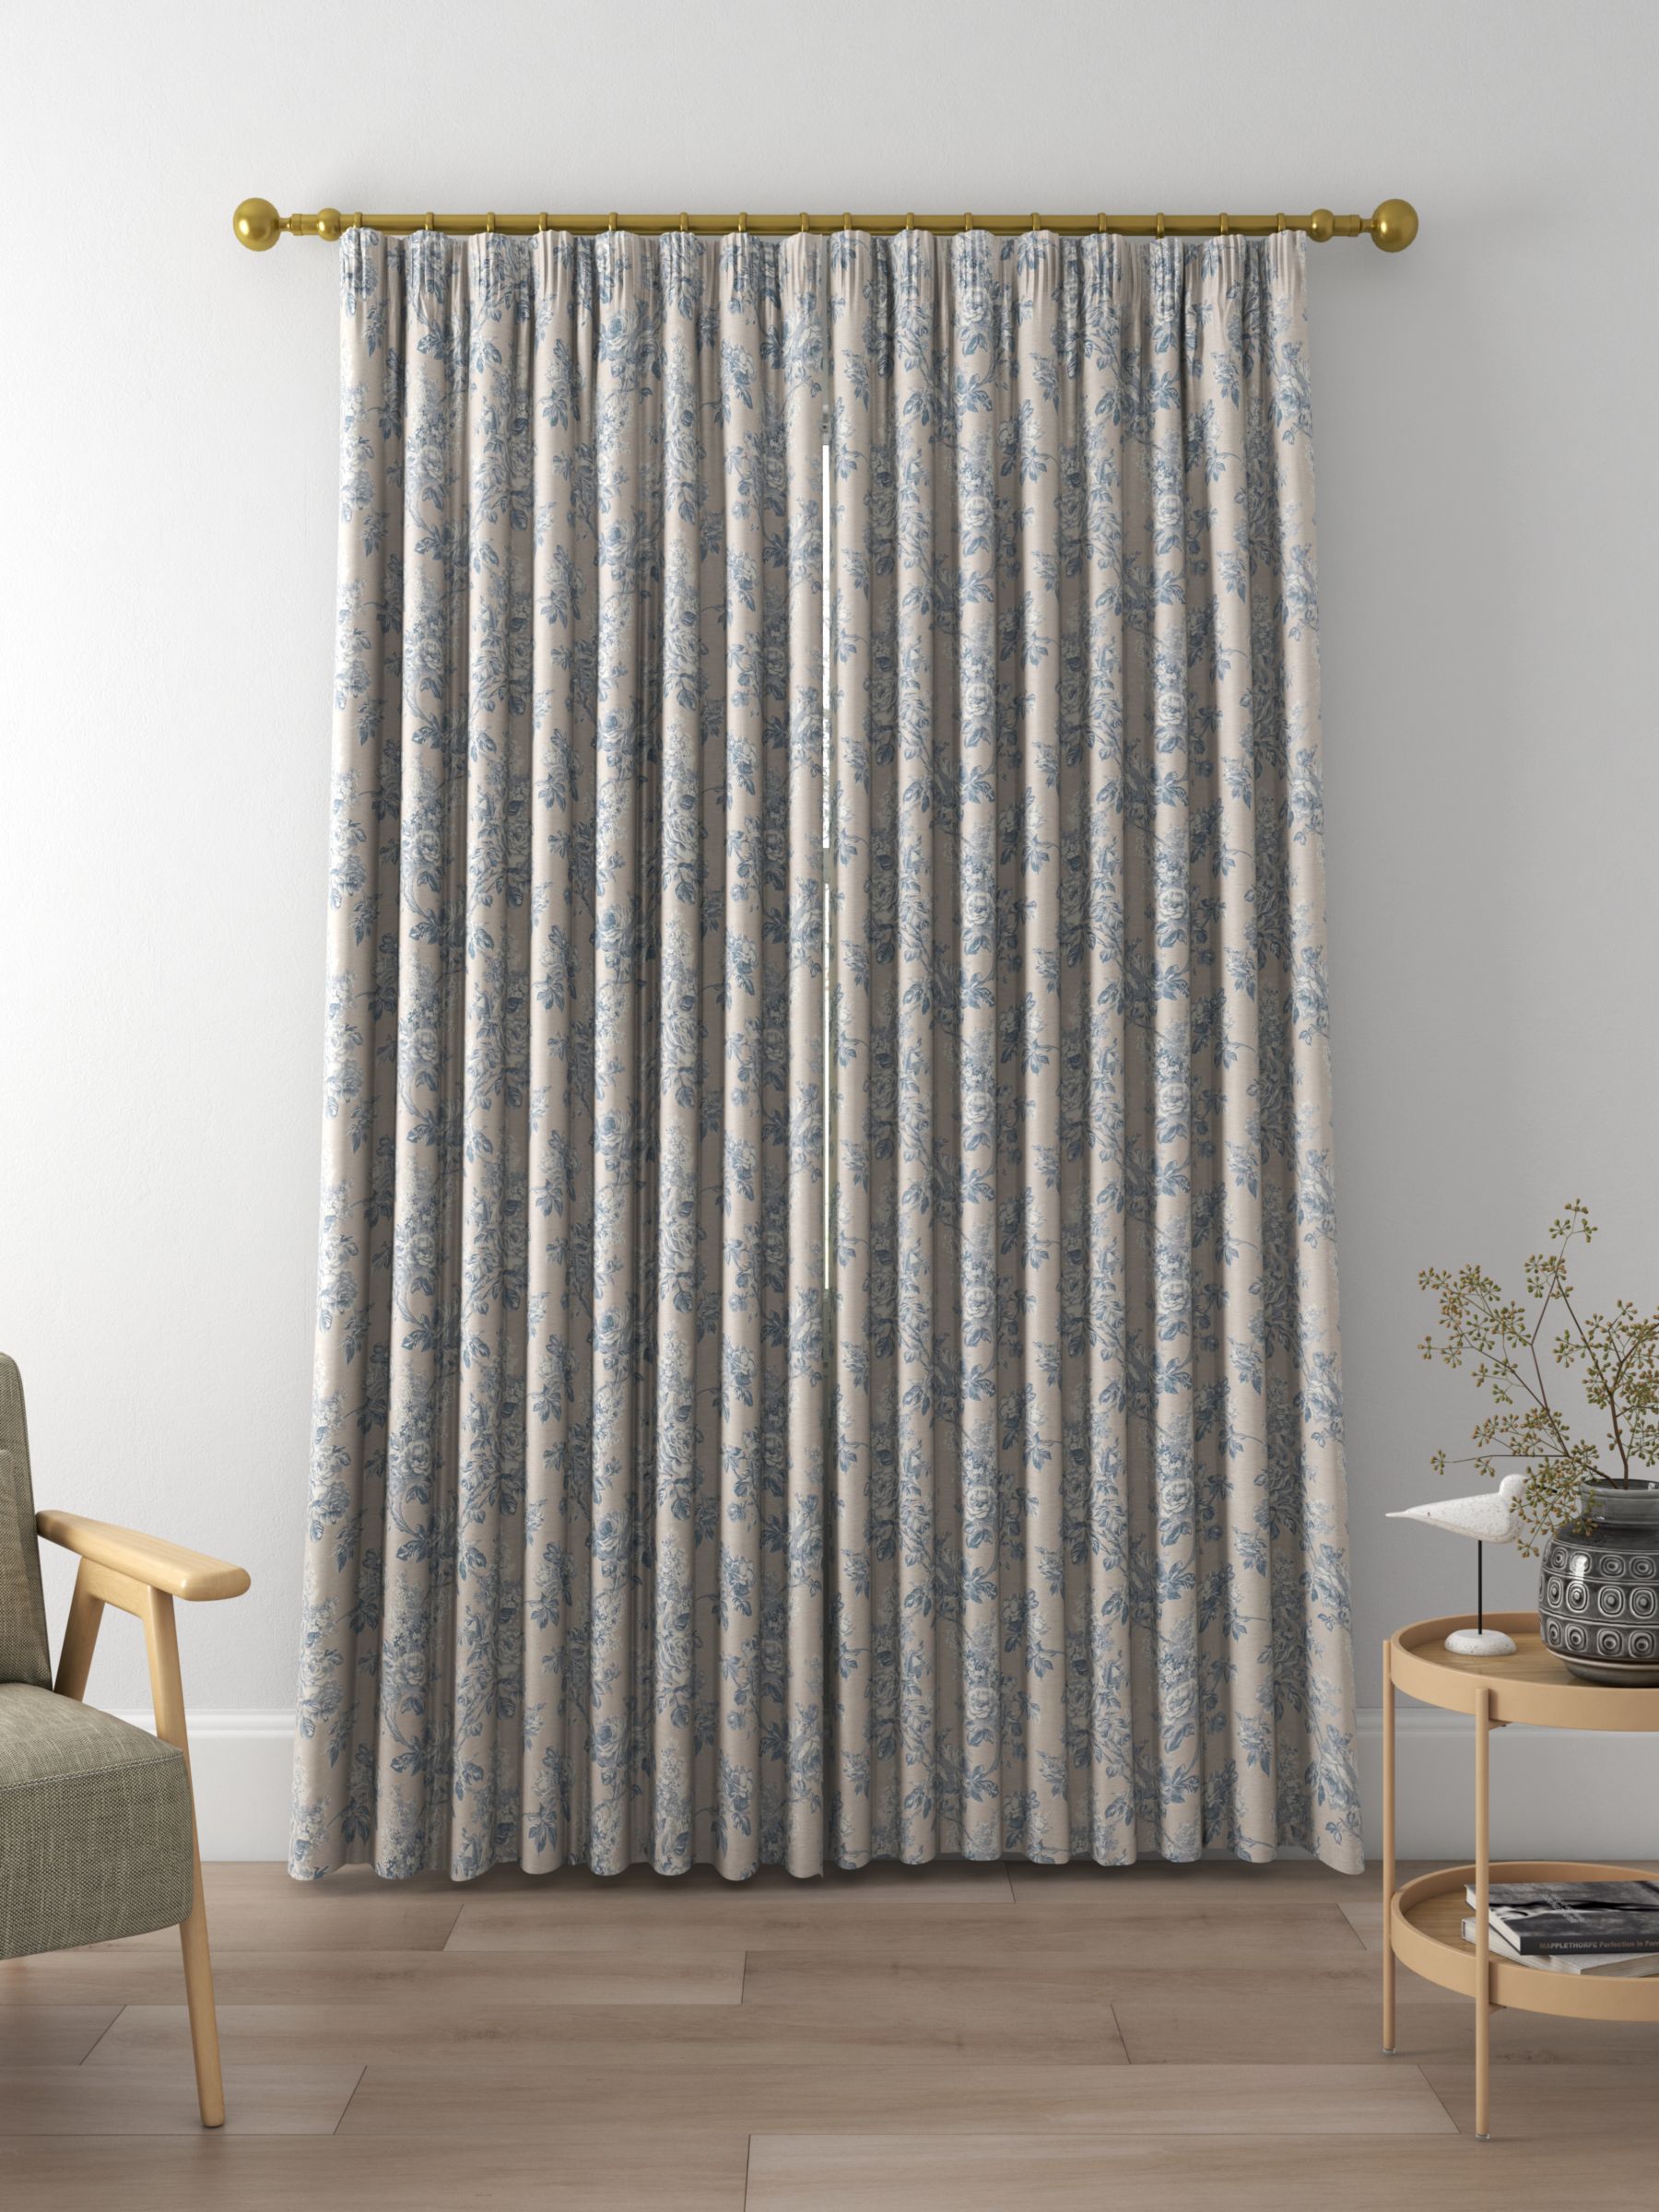 Sanderson Sorilla Damask Made to Measure Curtains, Delft/Linen